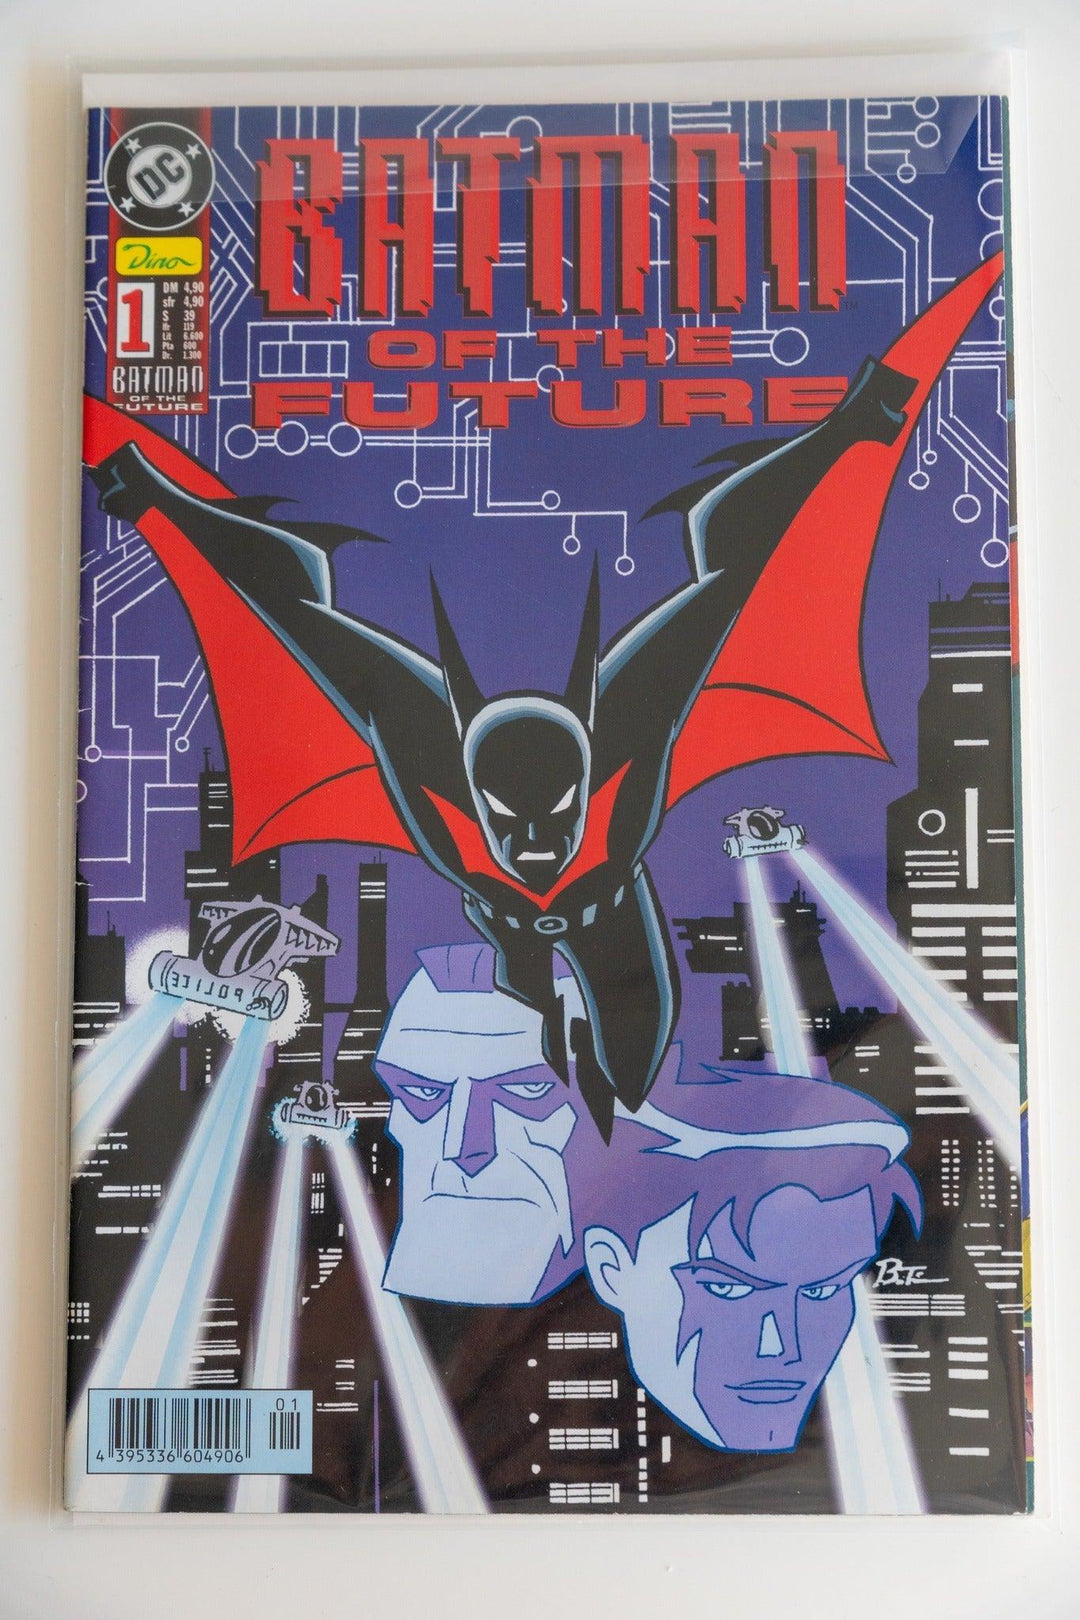 DC COMICS BATMAN OF THE FUTURE #1 DEUTSCH - Bobbis Store Hunde